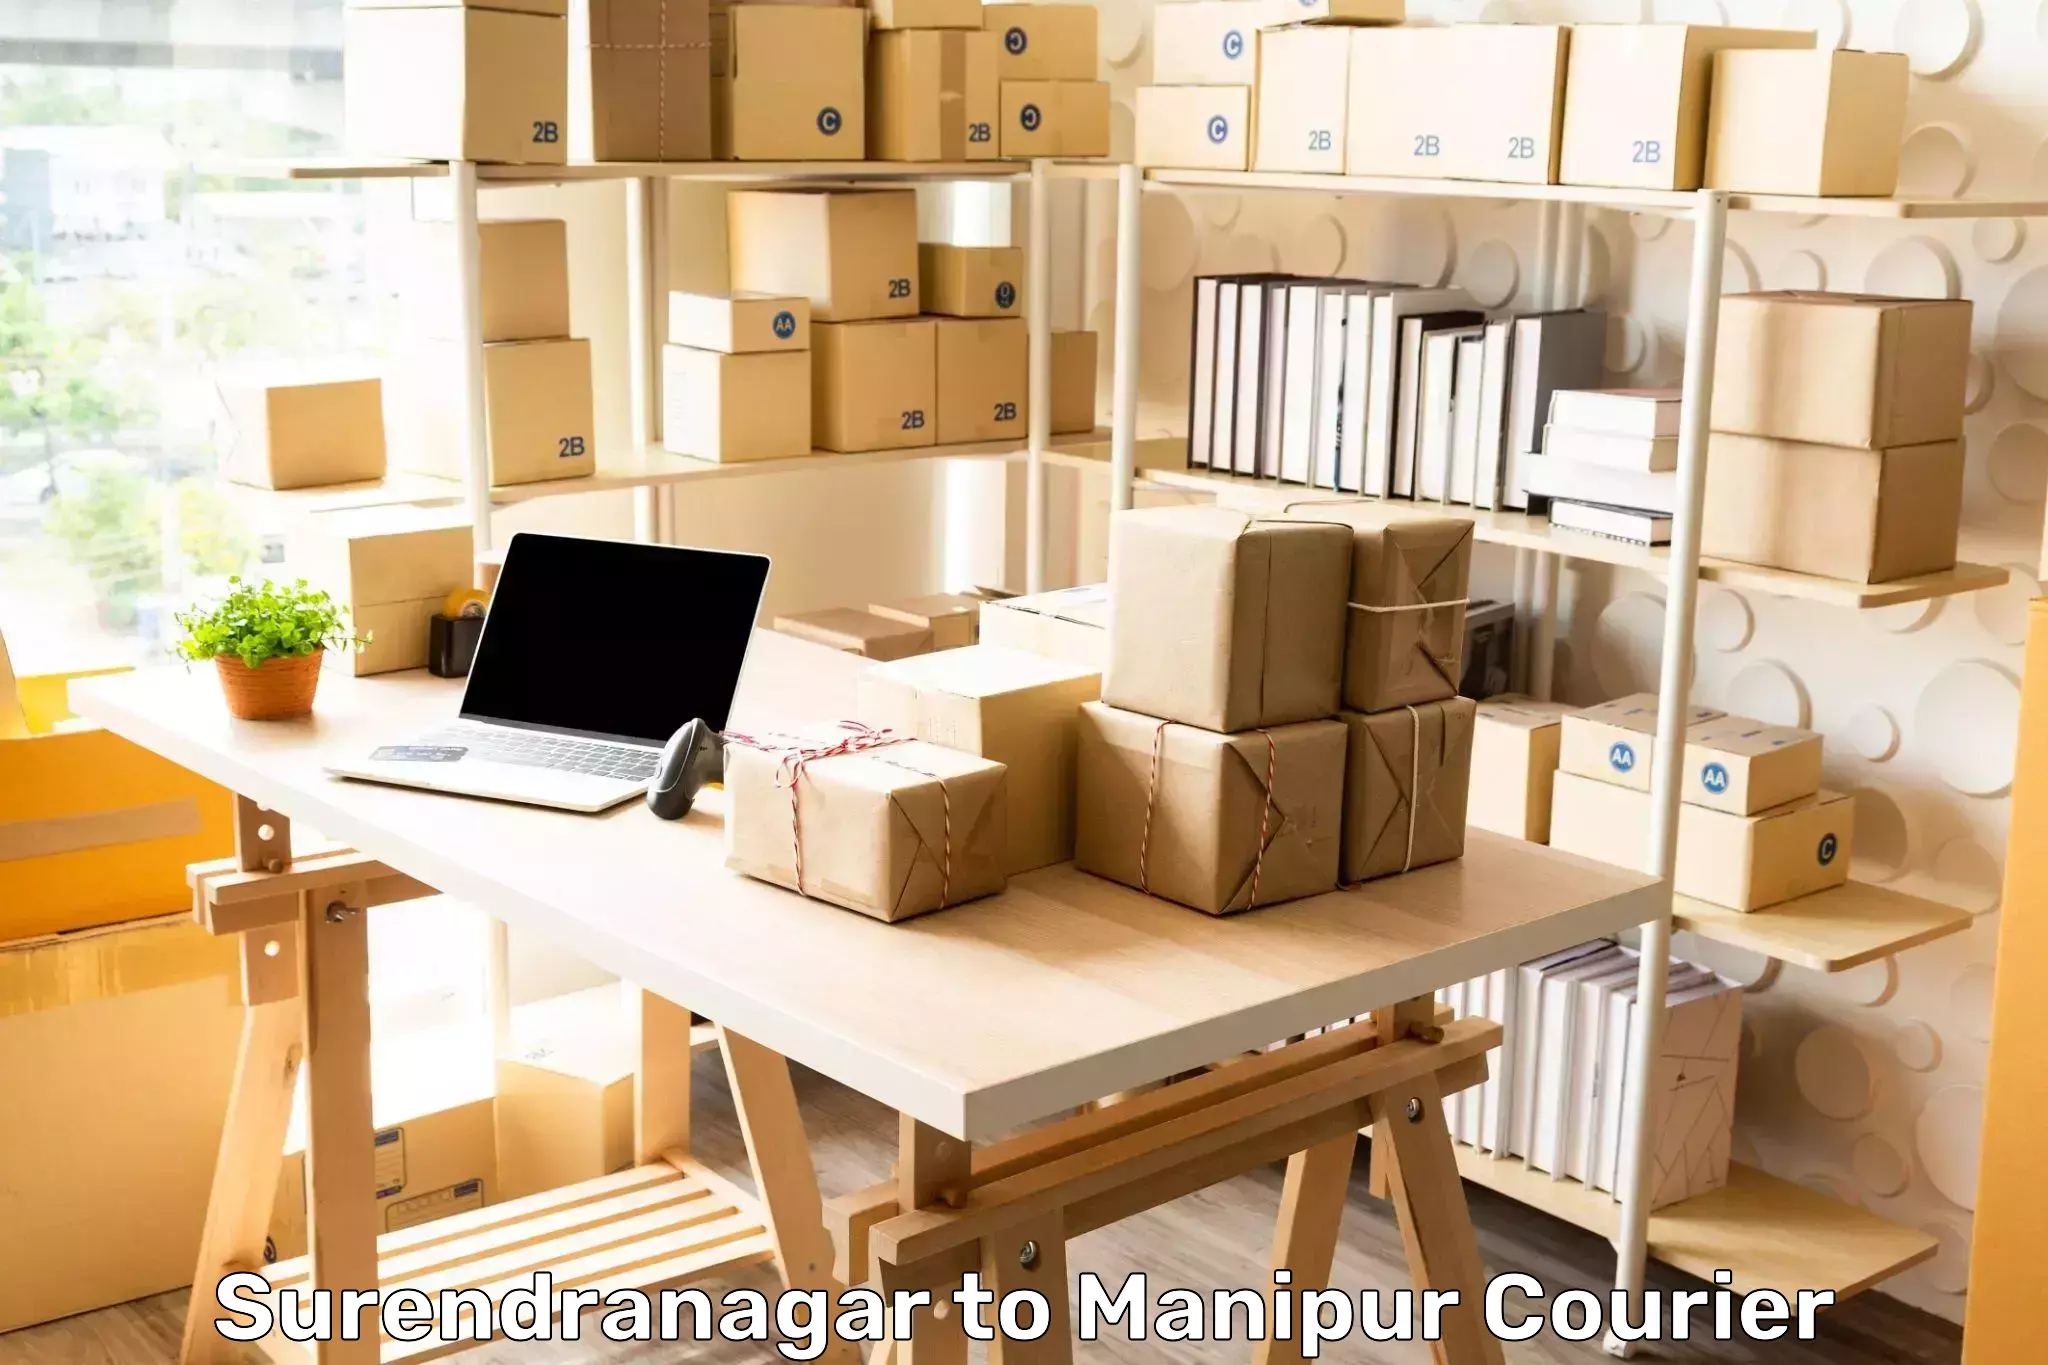 High-performance logistics Surendranagar to Manipur